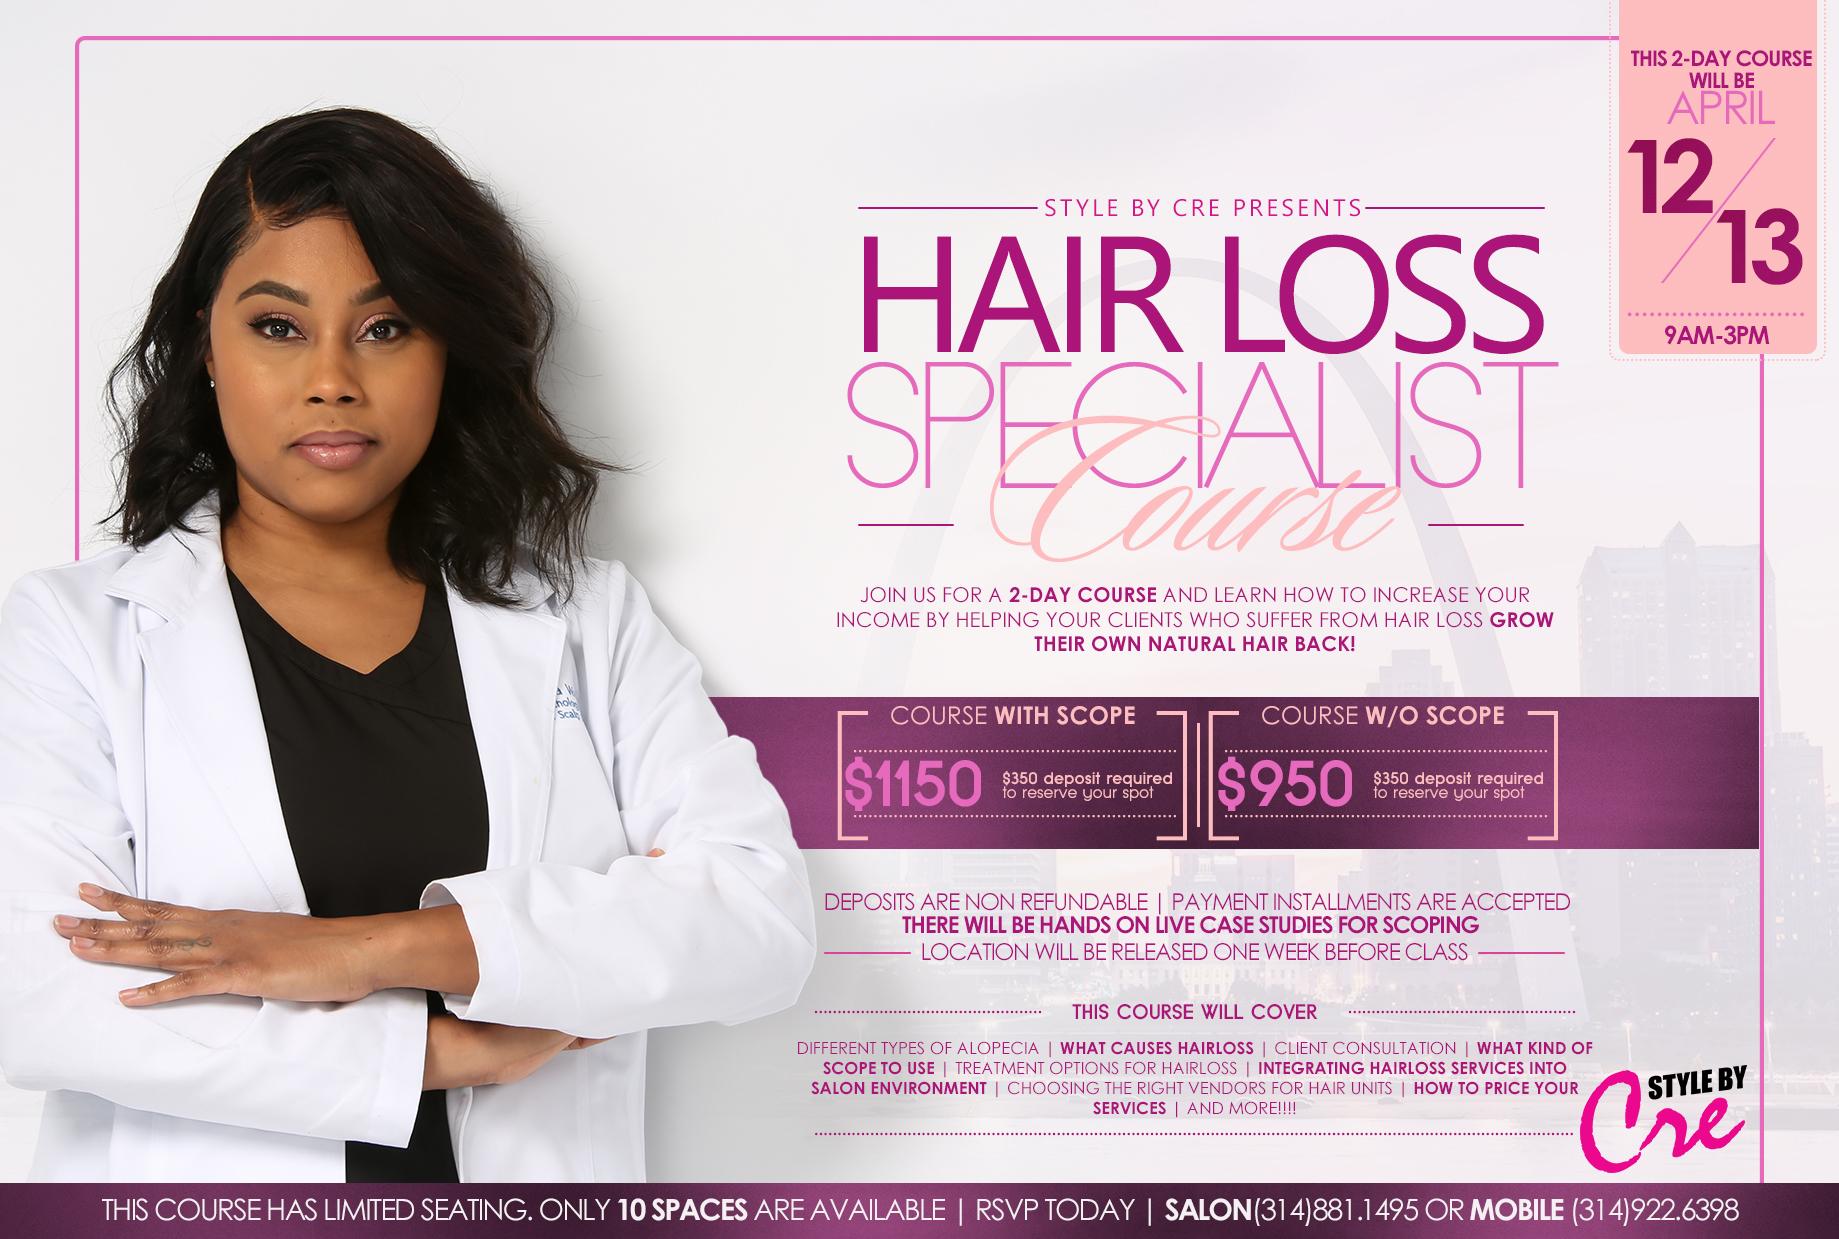 Hair Loss Specialist Certification - 12 APR 2020